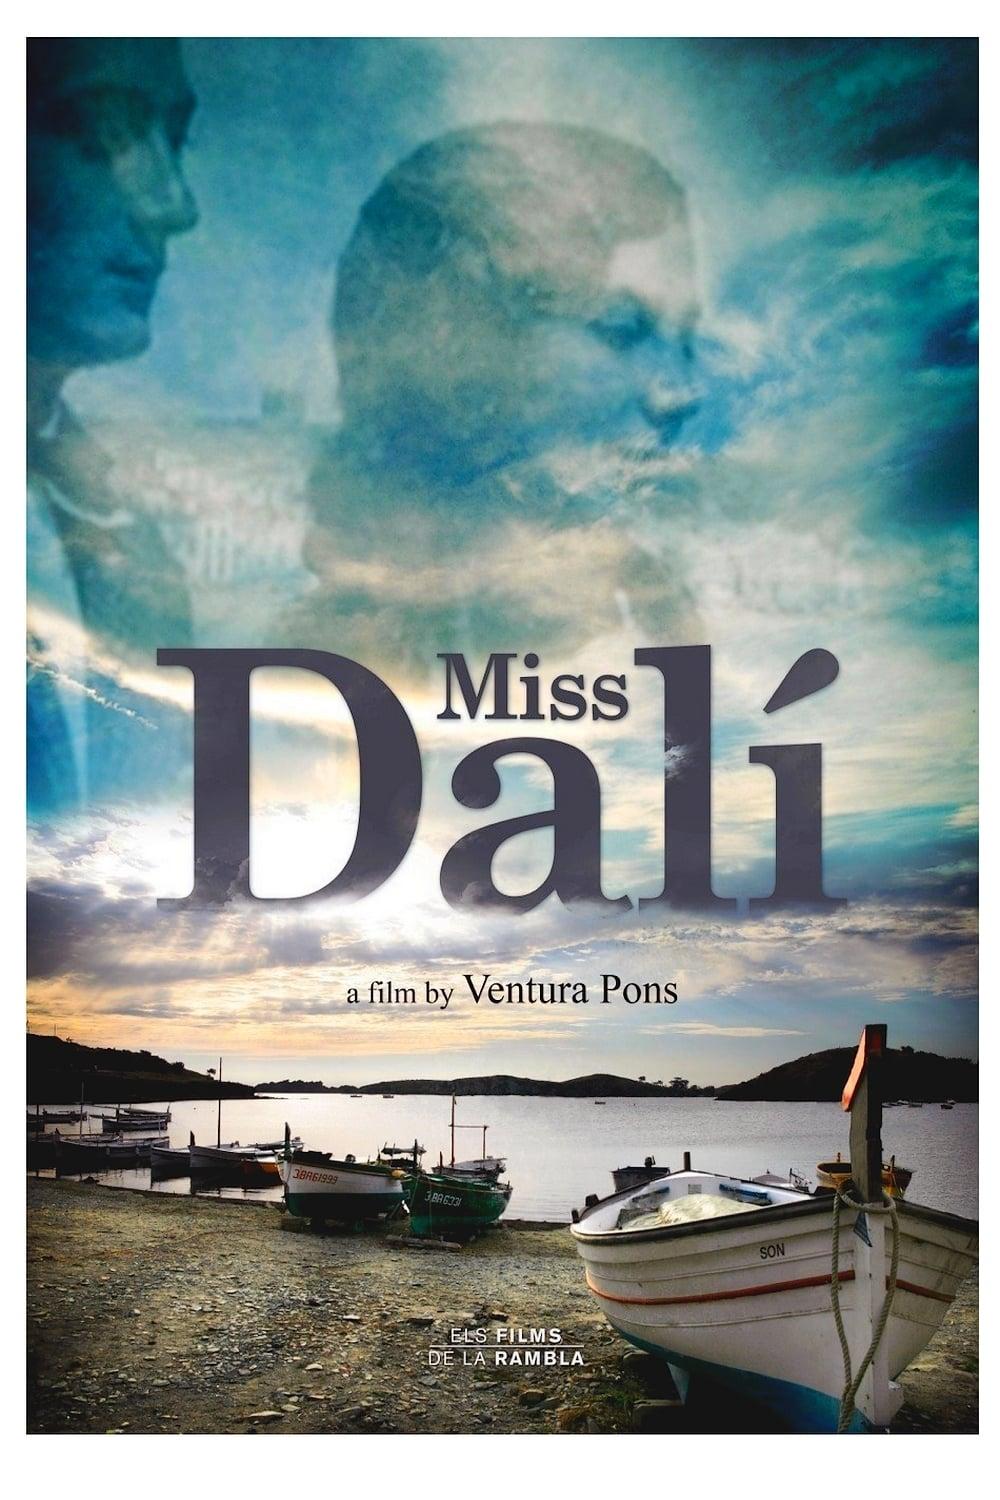 Miss Dalí poster